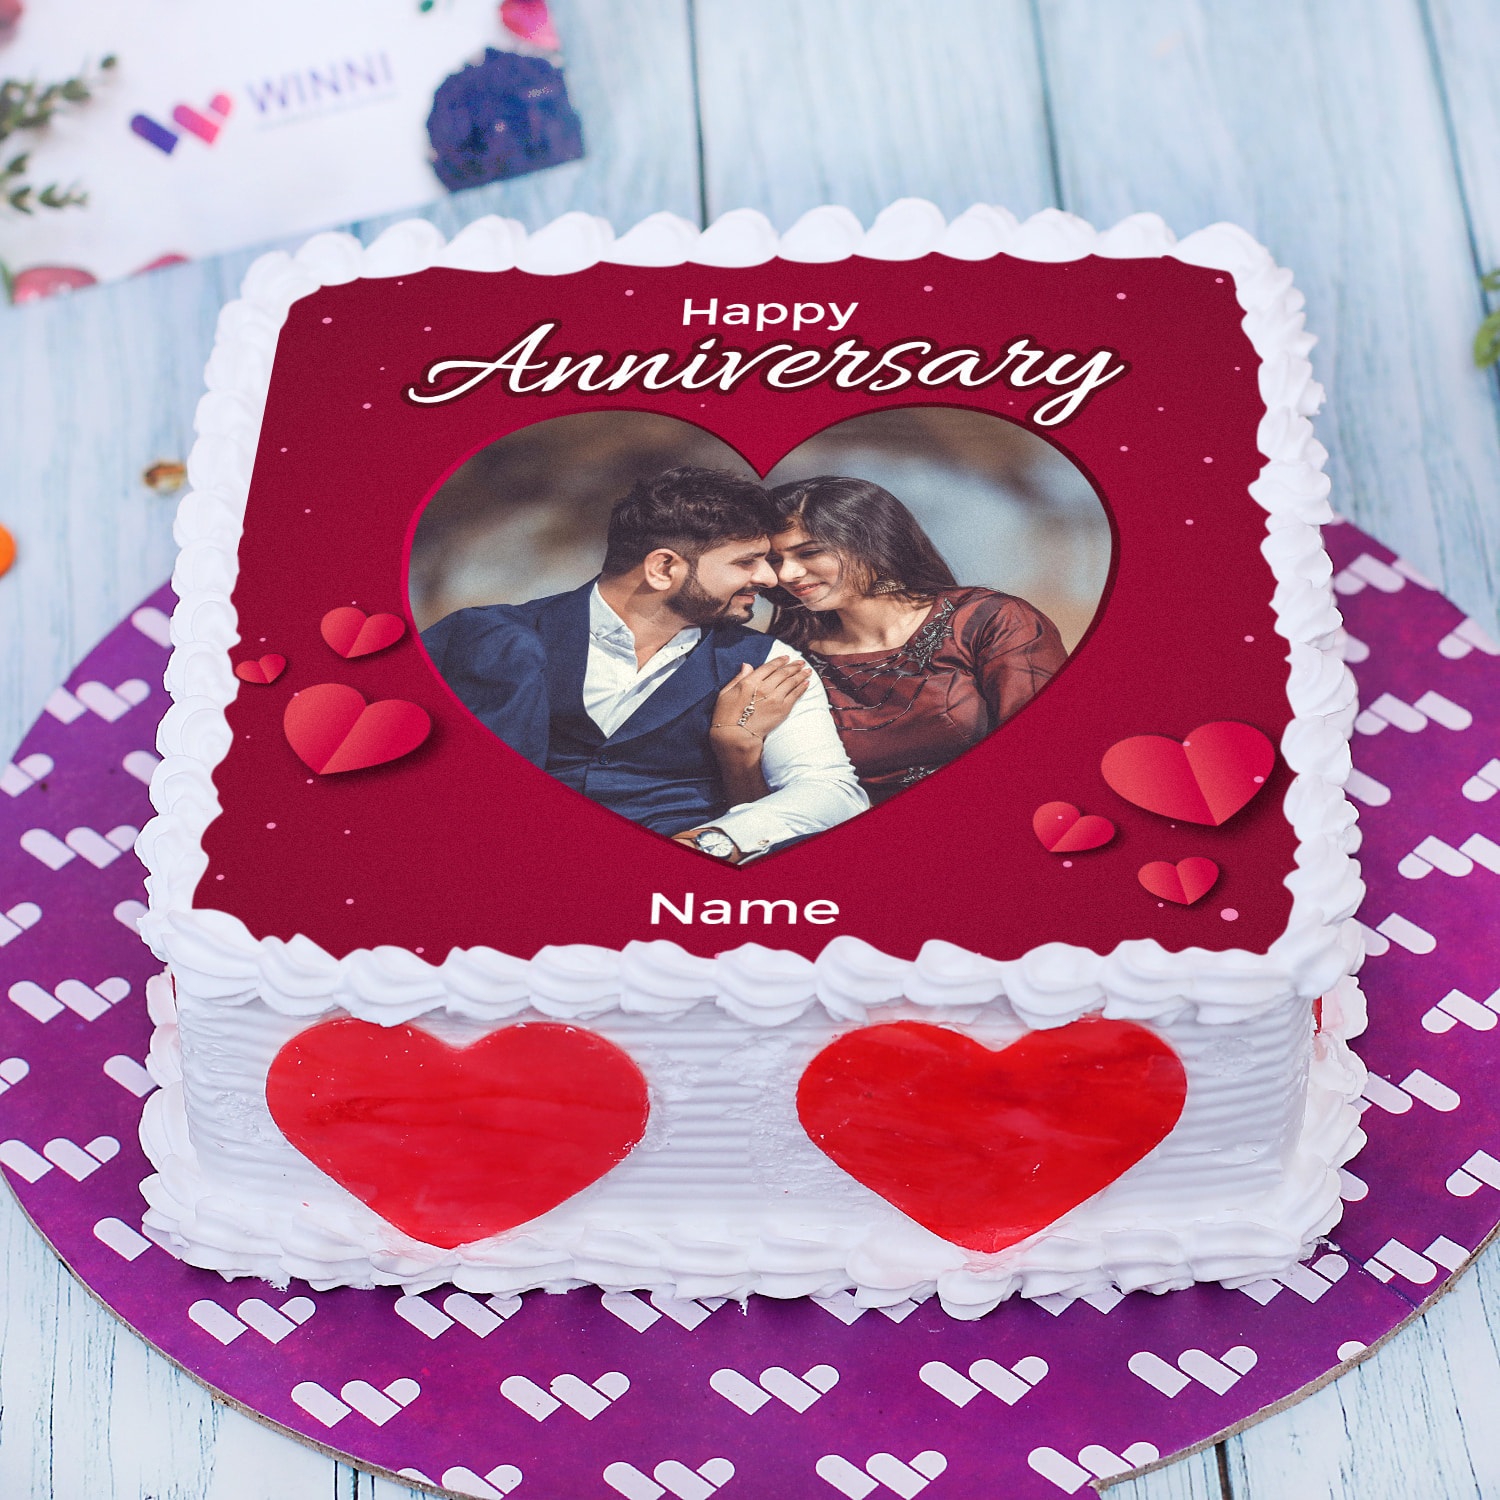 Magic Cake Shop - Red Heart Wedding Anniversary Cake | Facebook